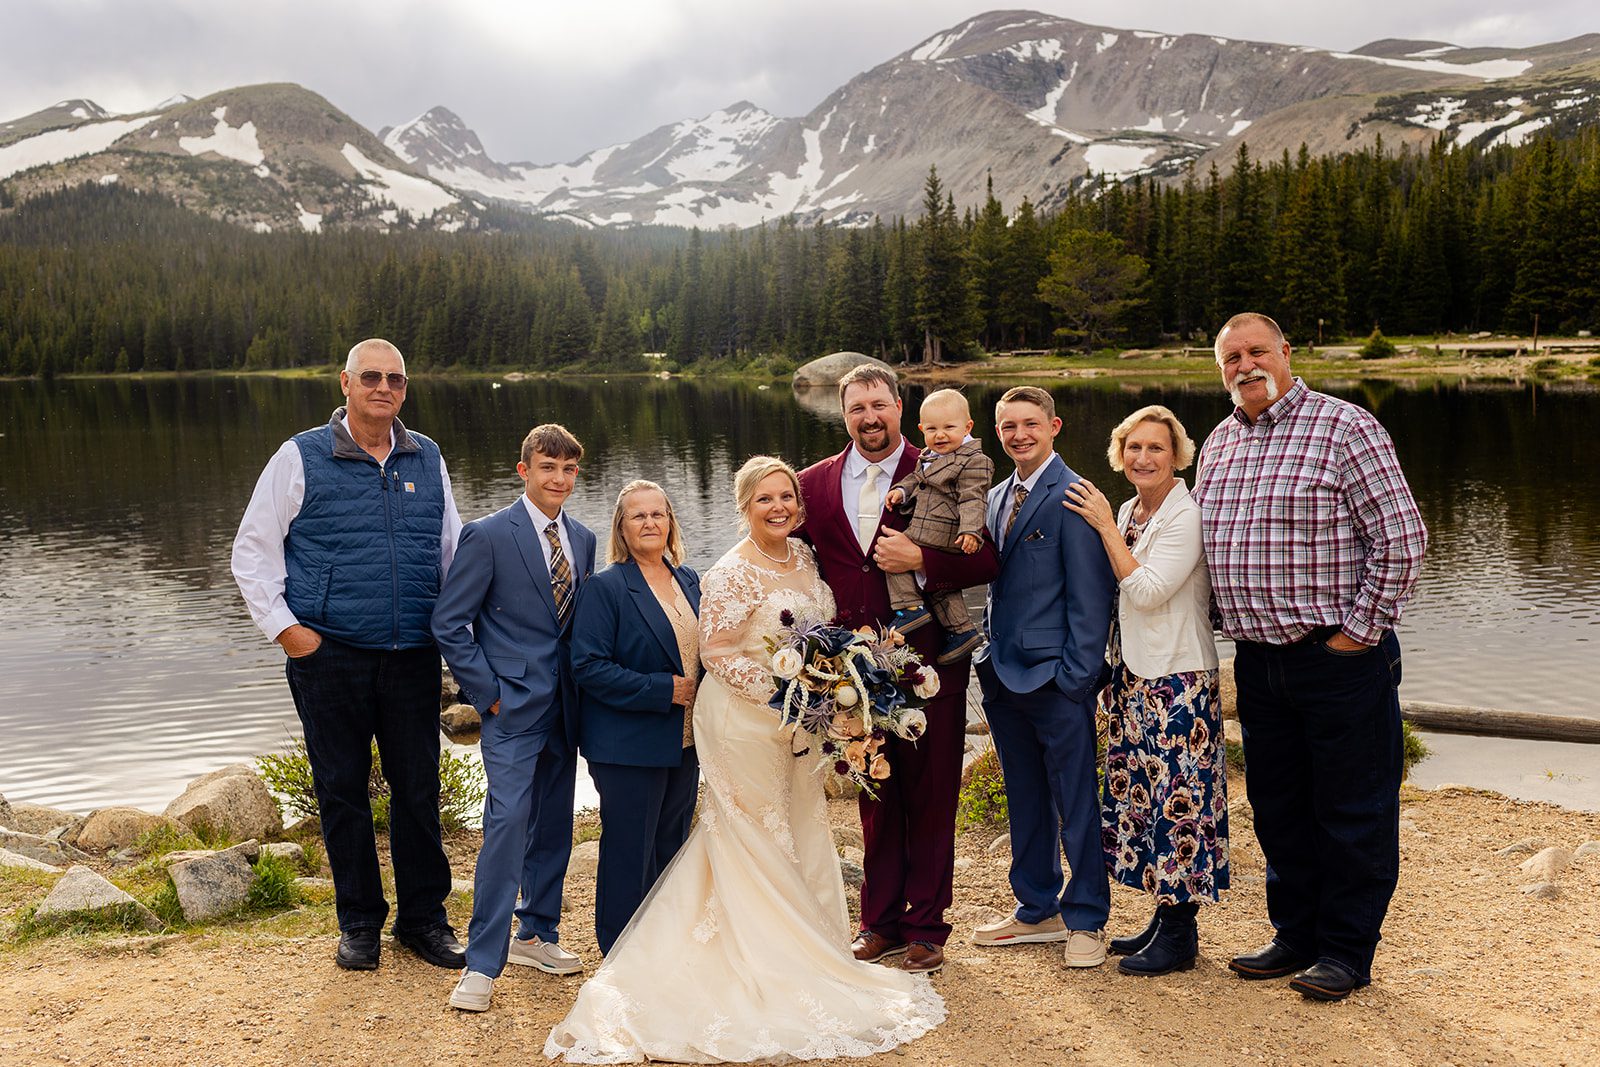 Group family photo after Brainard Lake wedding ceremony.